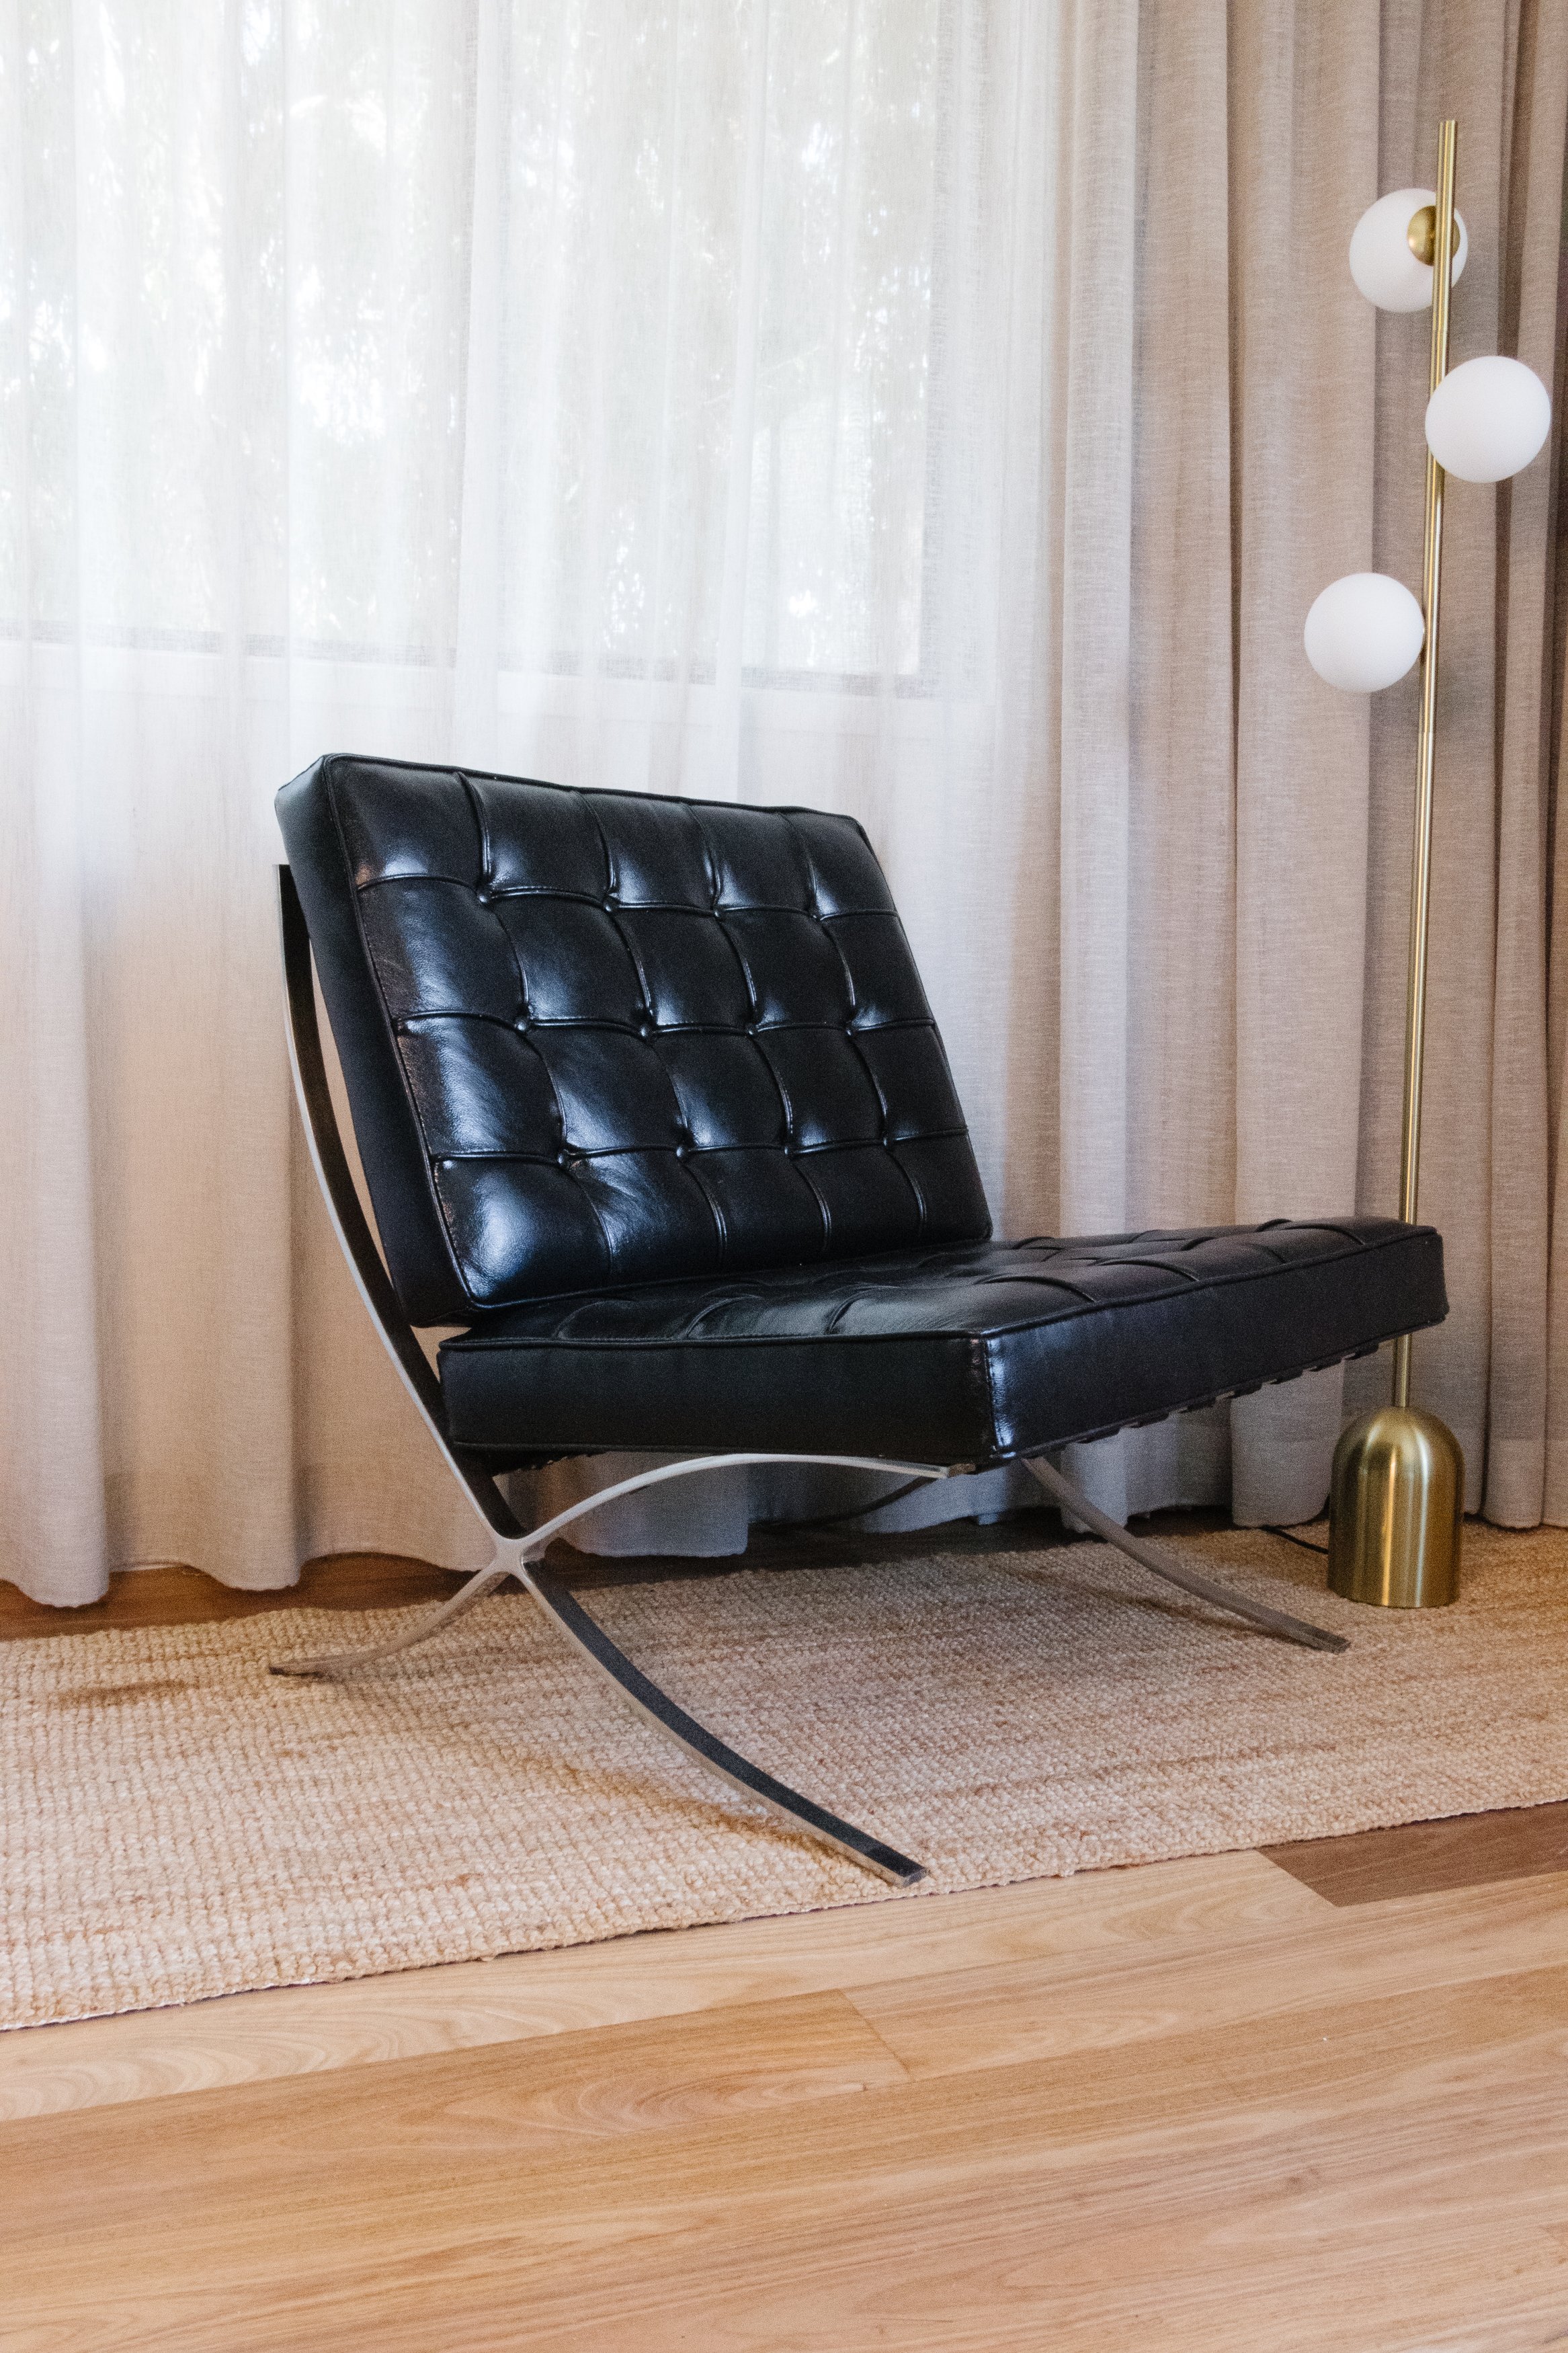 Chrome Leather Chair Restoration (27 of 54).jpg